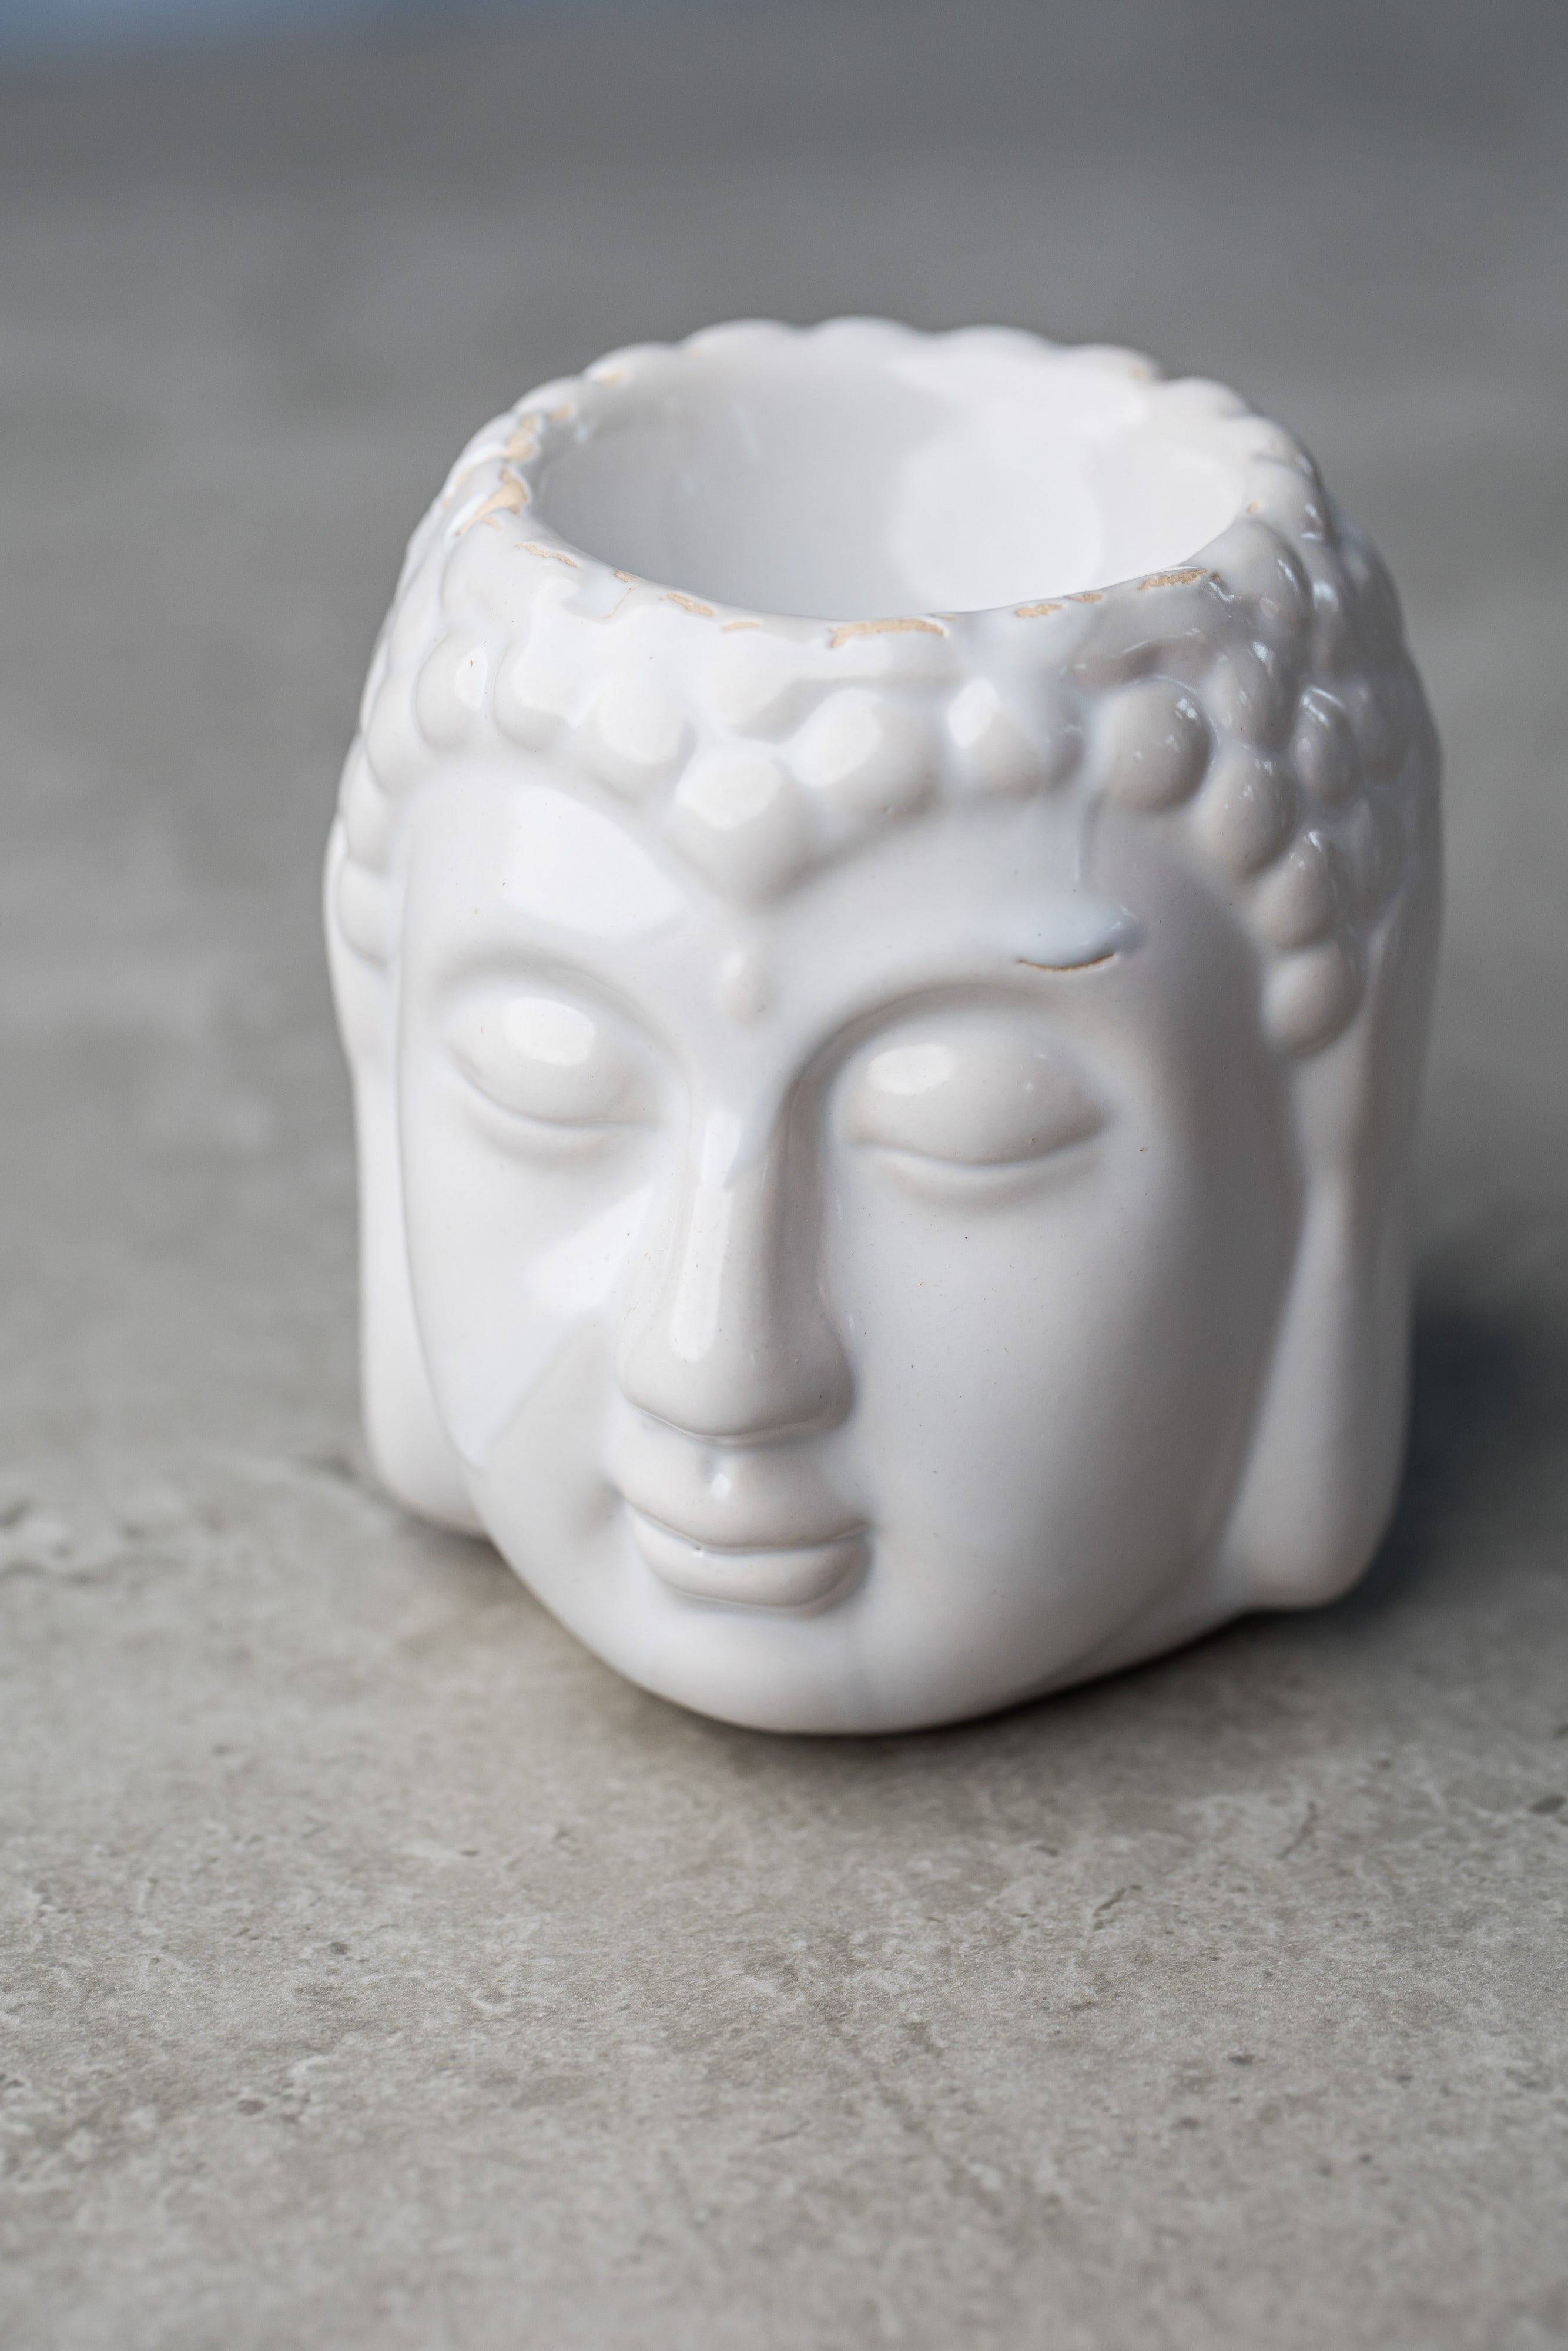 Buddha Head Ceramic Aromatherapy Oil Burner - Elegant Diffuser for Essential Oils &amp; Relaxation